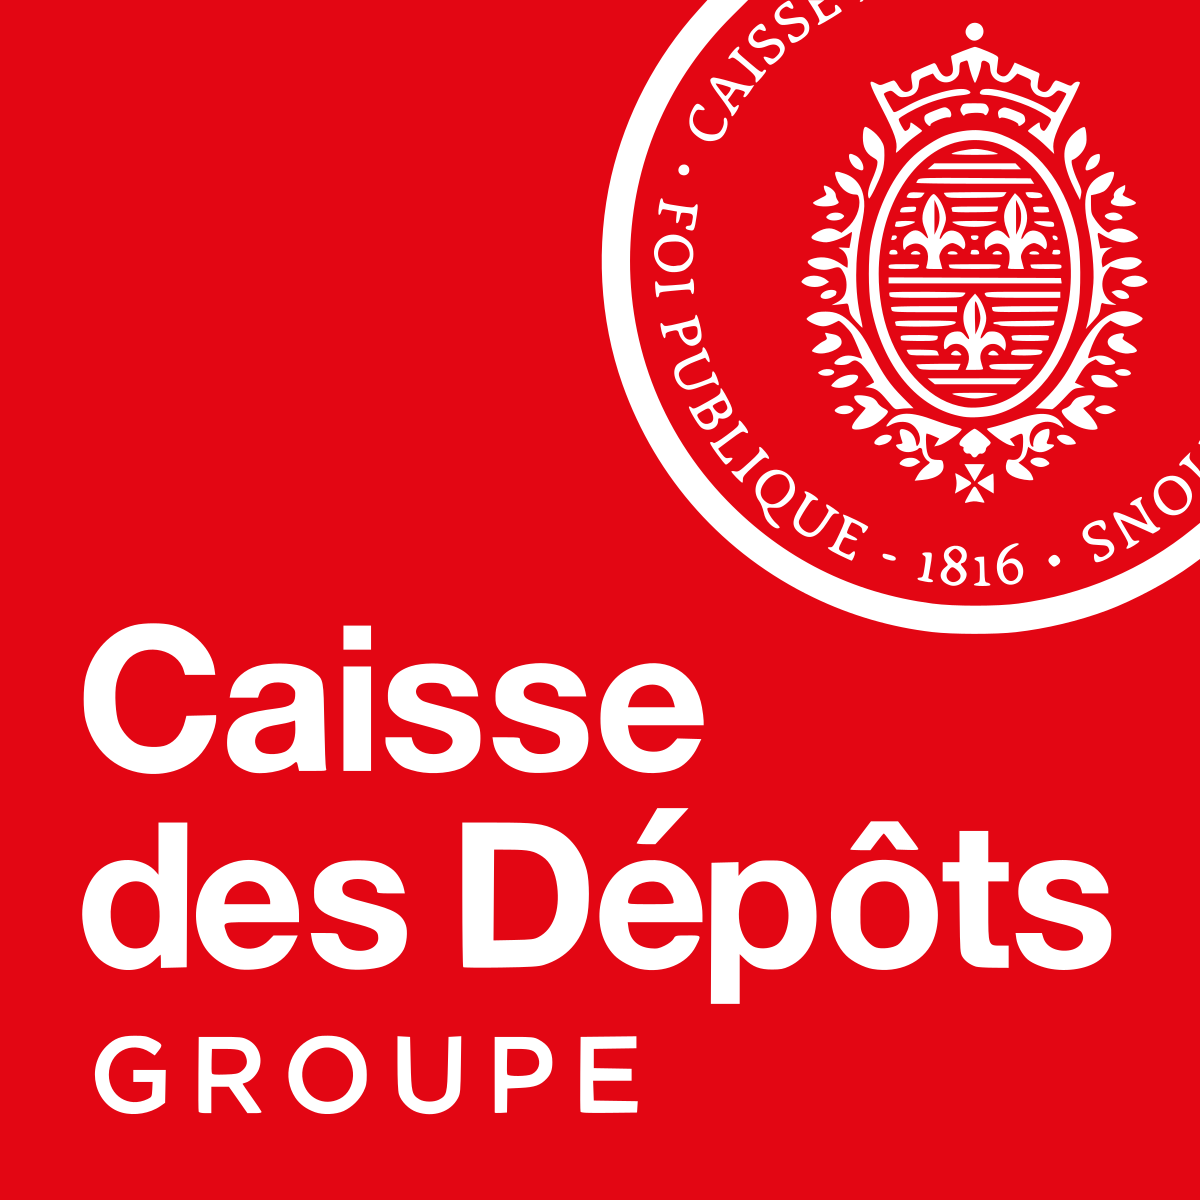 You are currently viewing Caisse des Dépôts